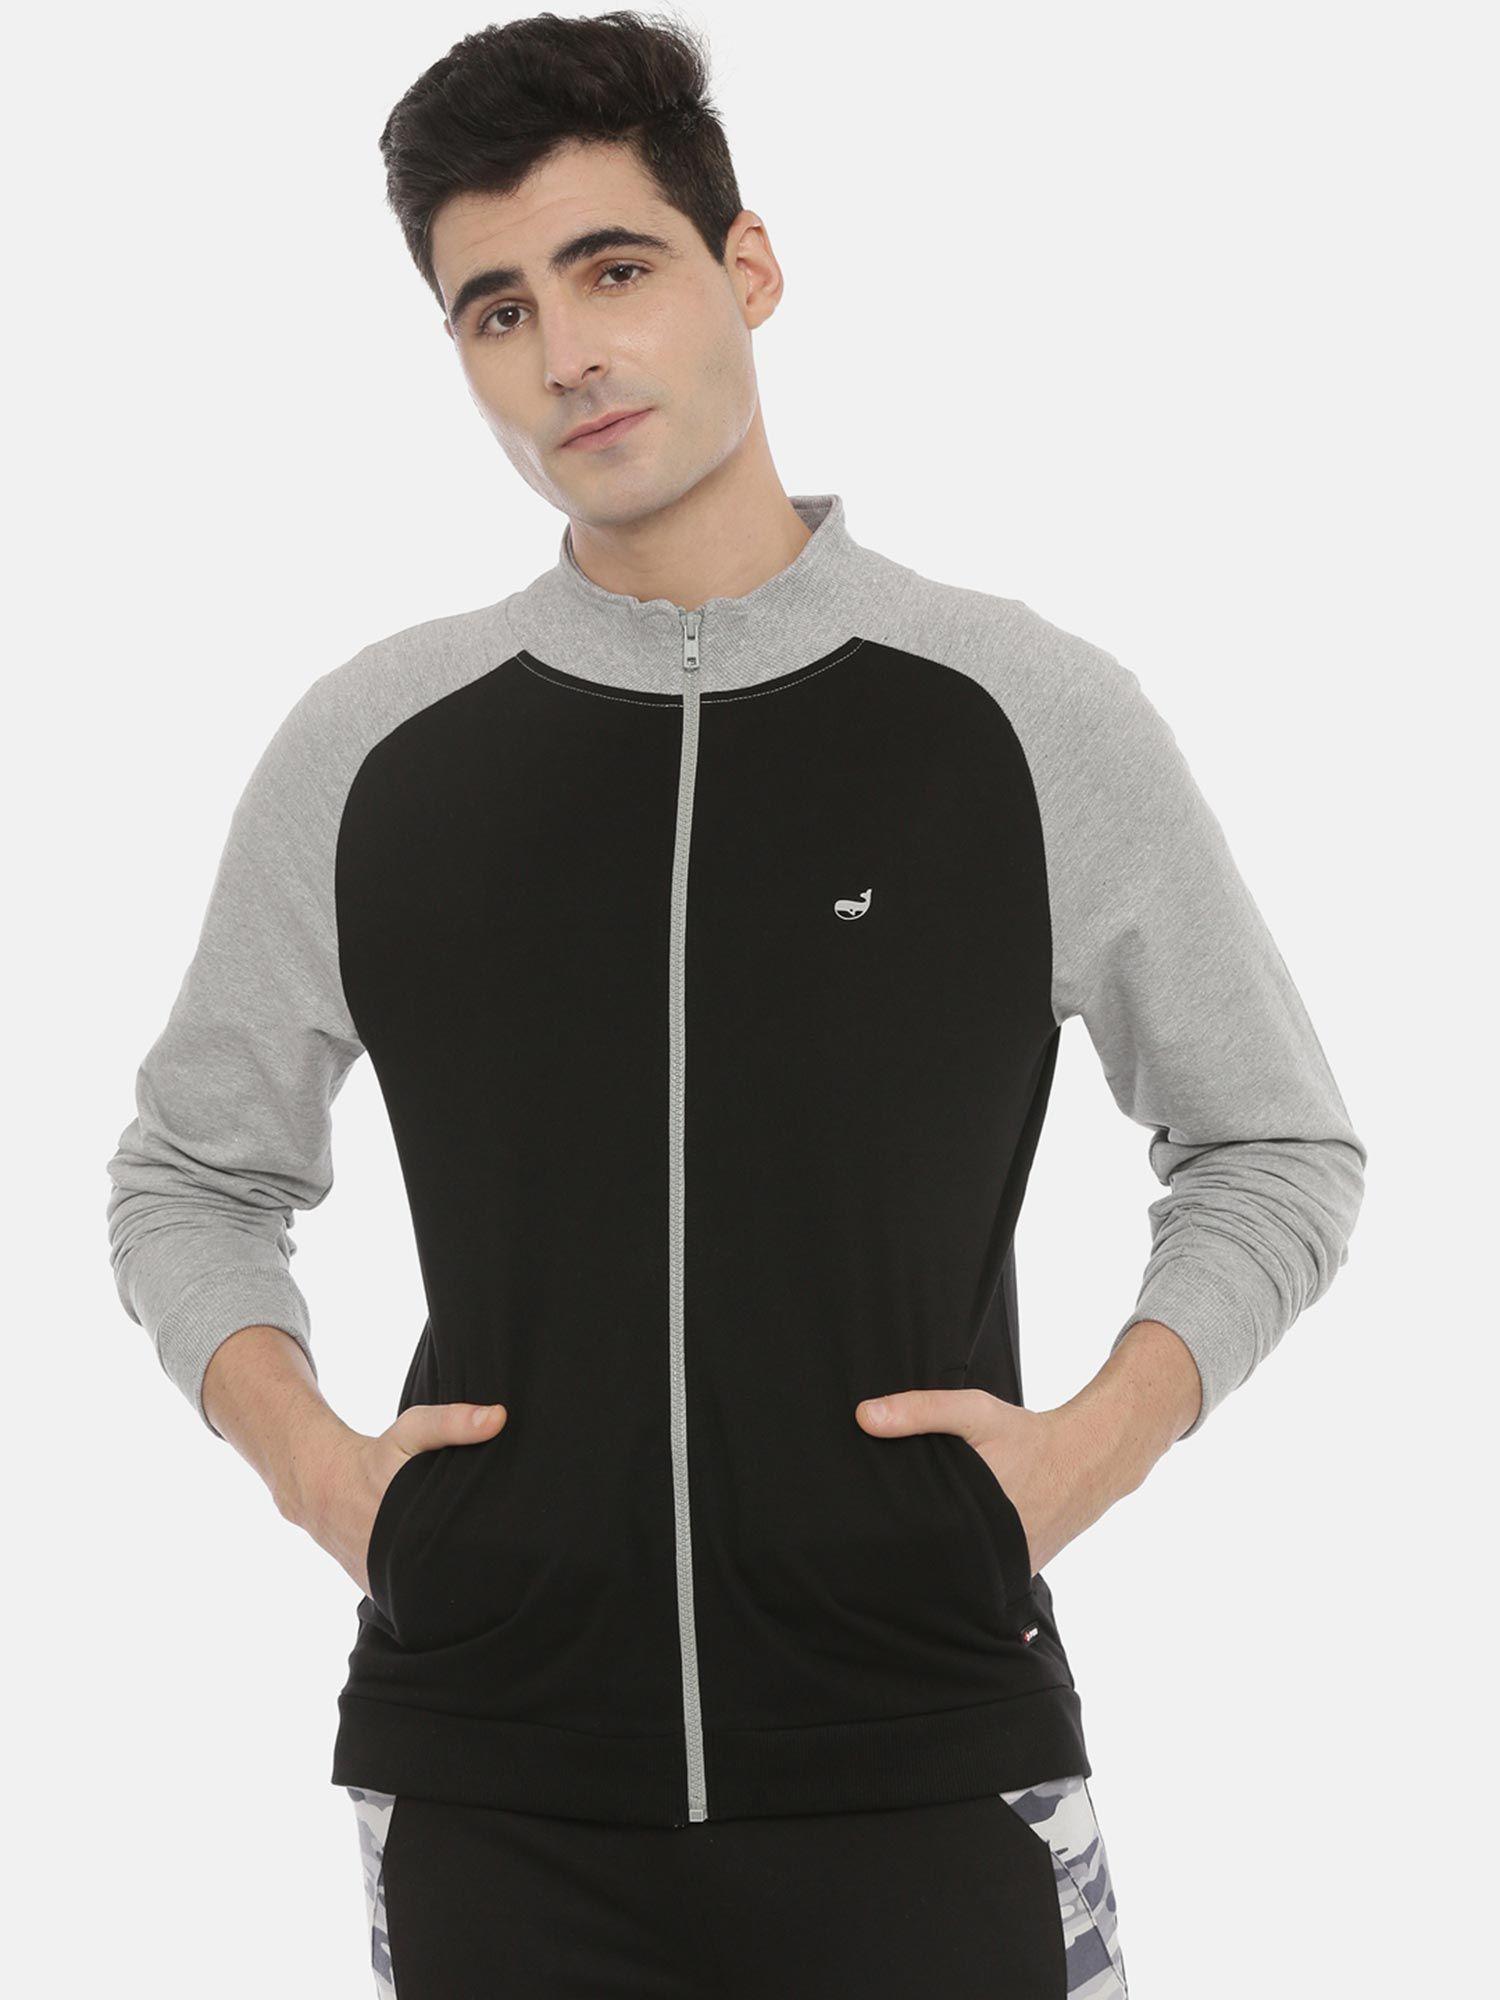 men grey & black colourblocked sweatshirt